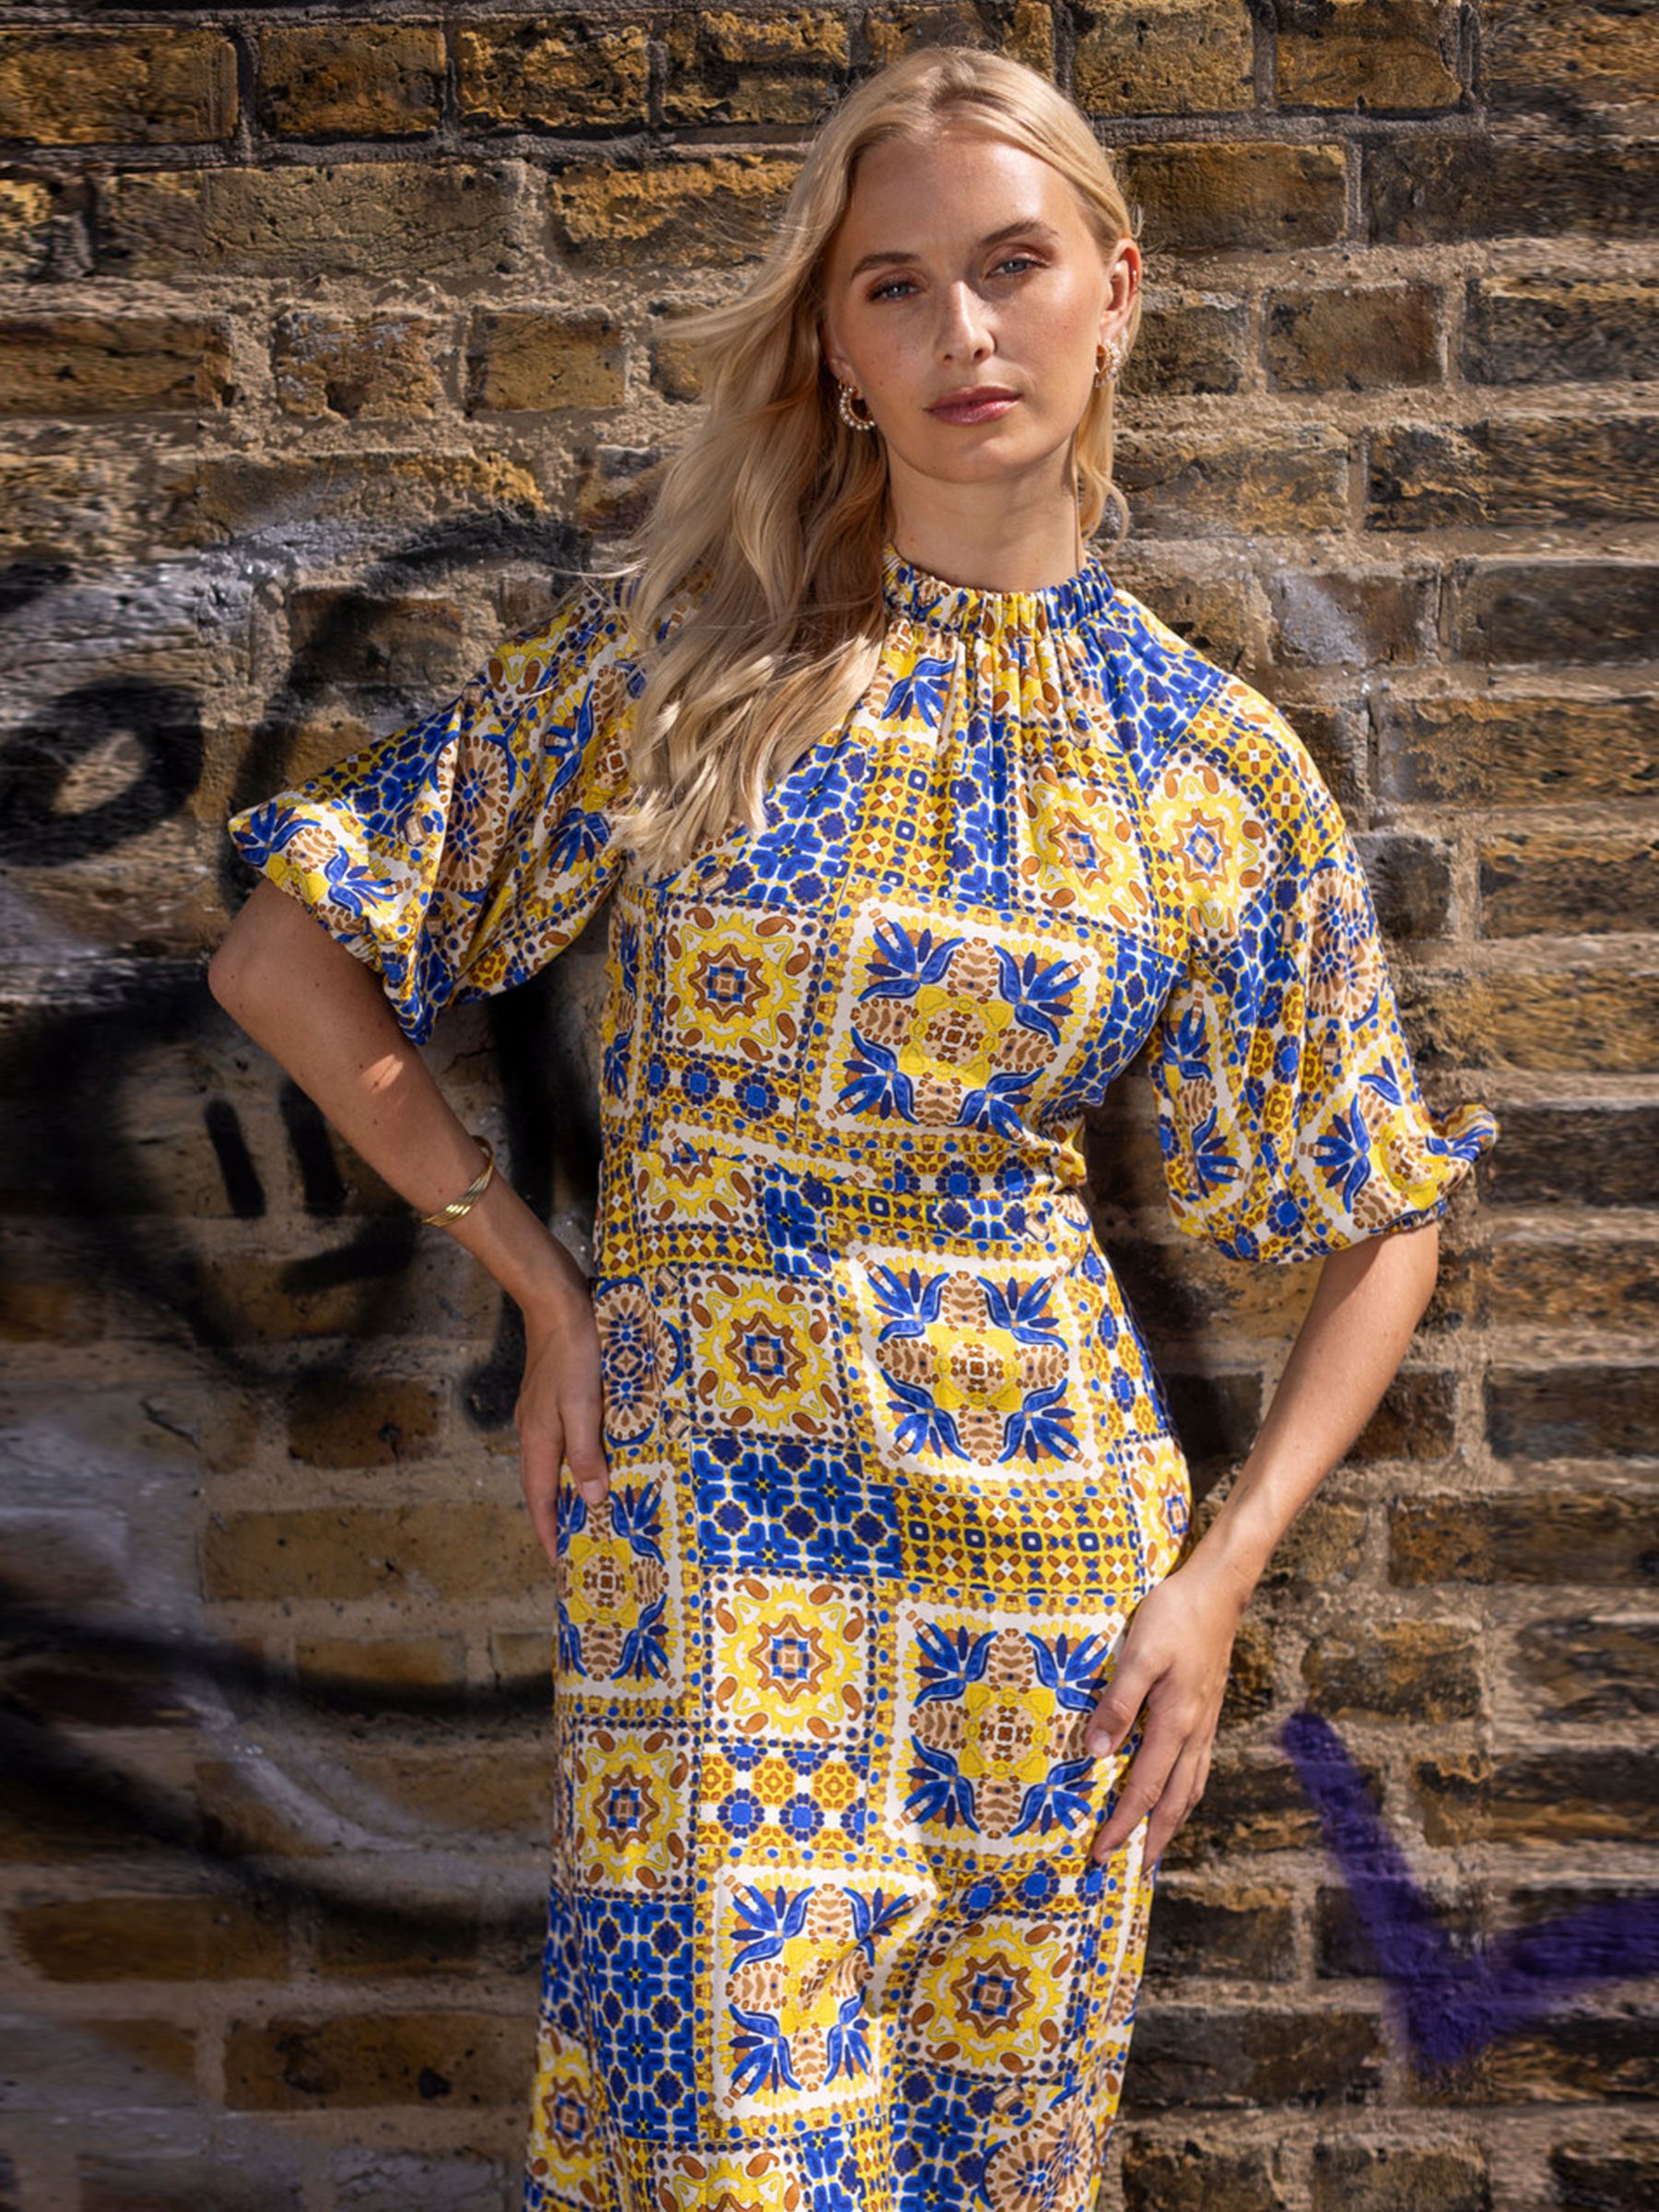 Closet London Tile Print Midi Dress, Yellow